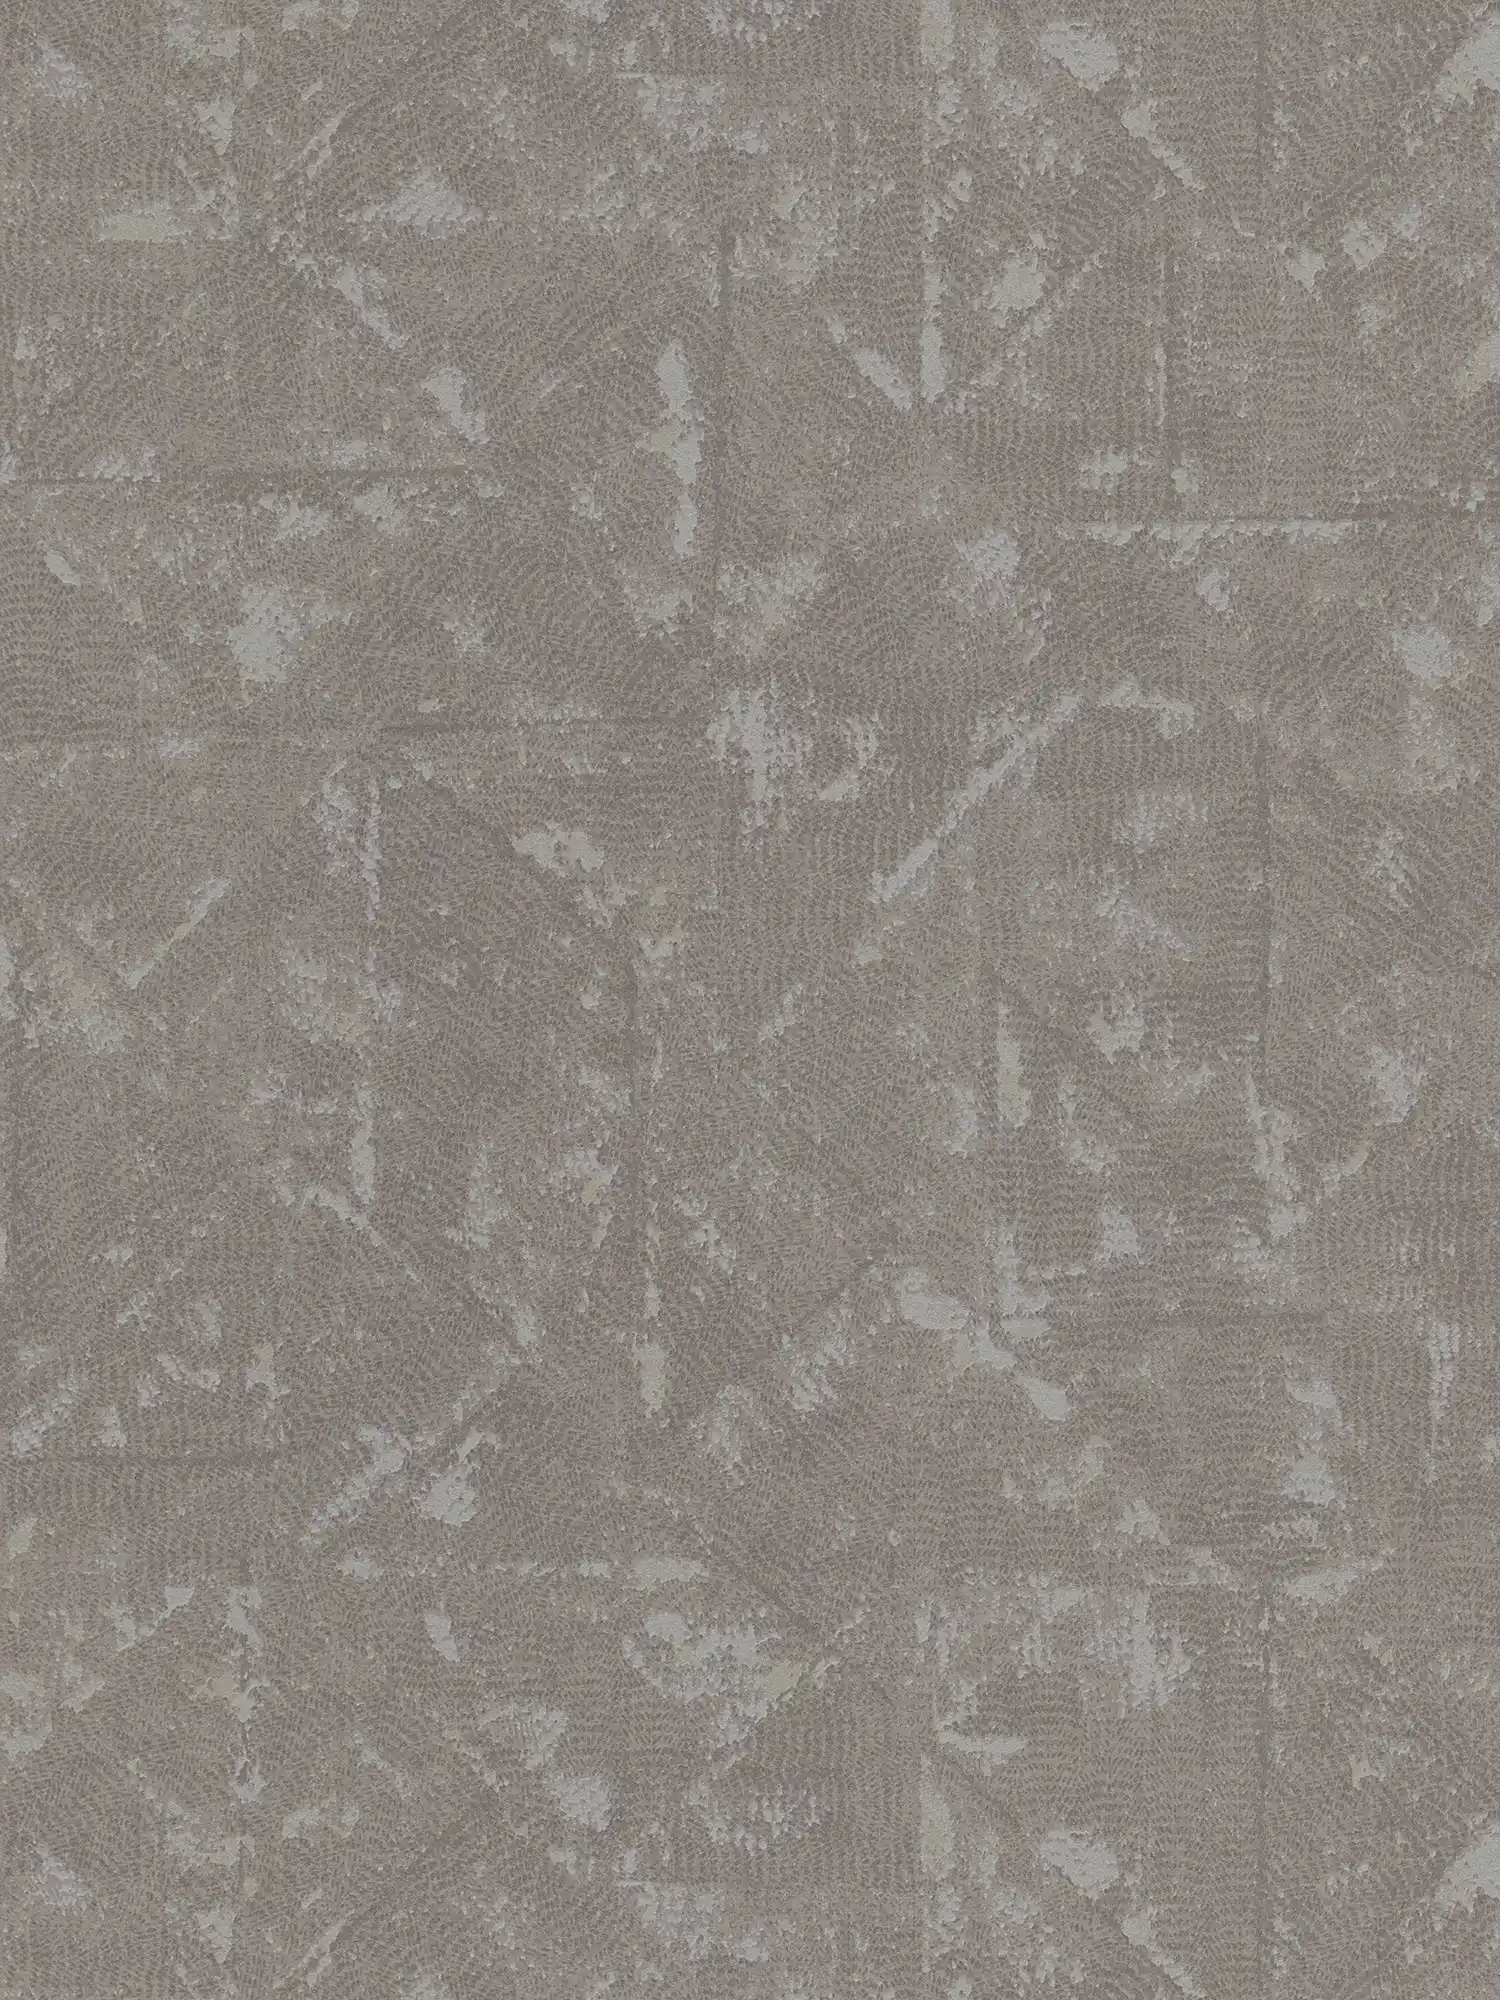         Unifarbene Vliestapete in Grau, asymmetrische Details – Grau, Silber
    